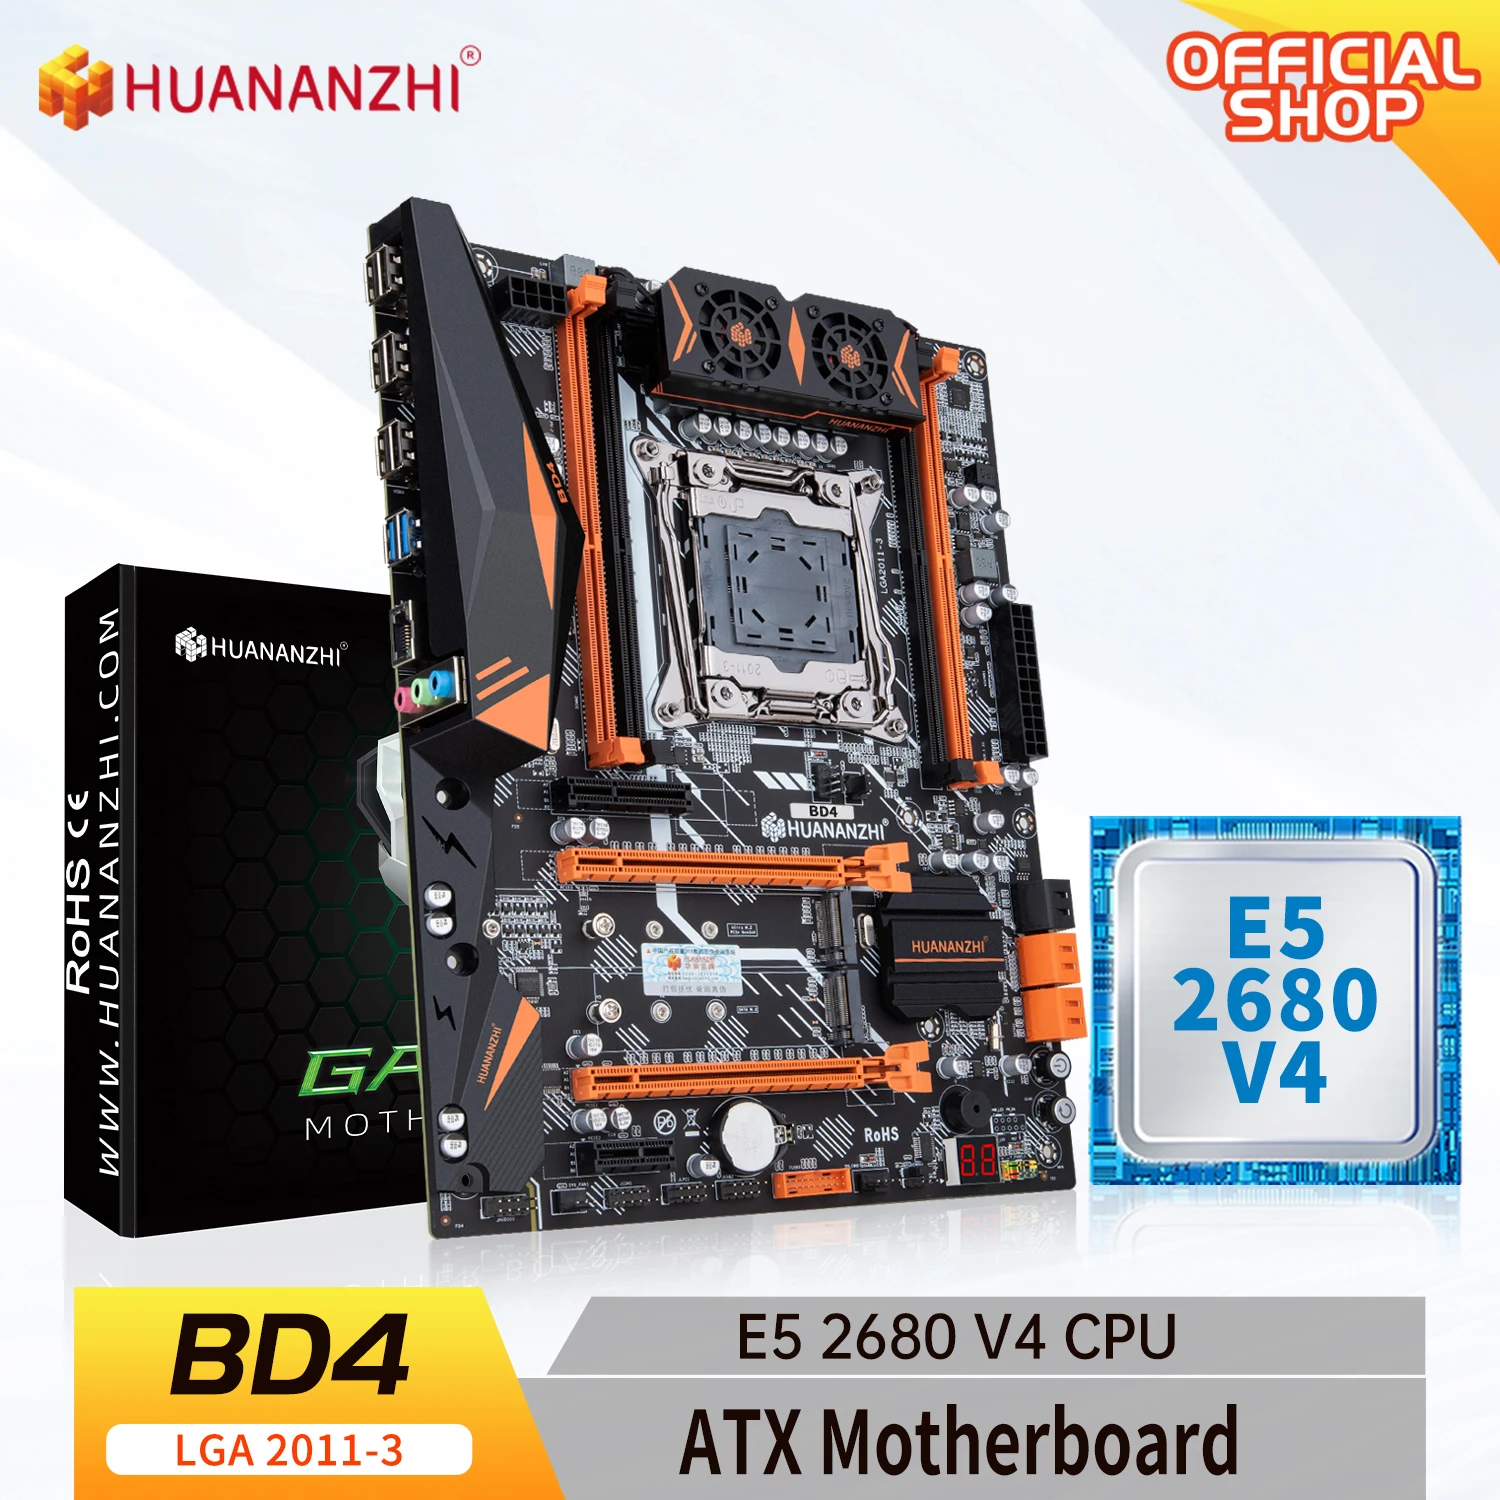 

HUANANZHI X99 BD4 LGA 2011-3 XEON X99 Motherboard with Intel E5 2680 V4 support DDR4 RECC NON memory combo kit set NVME NGFF